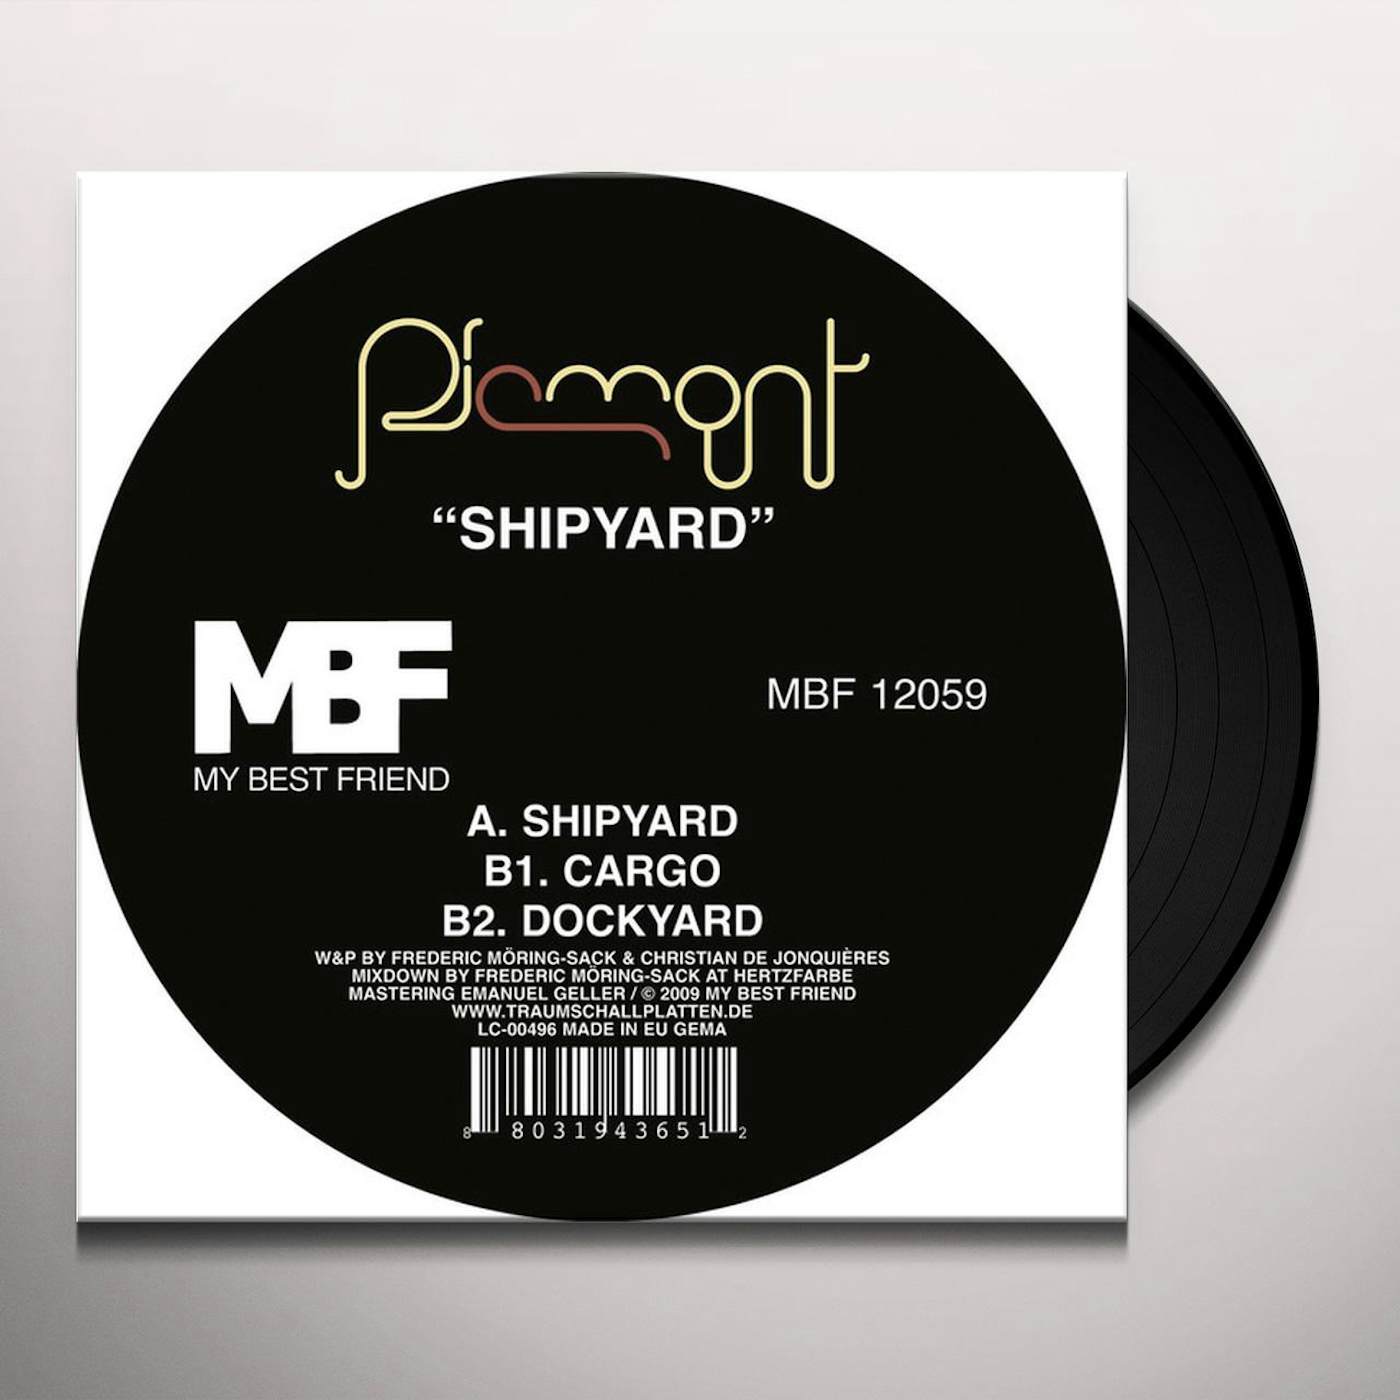 Piemont Shipyard Vinyl Record